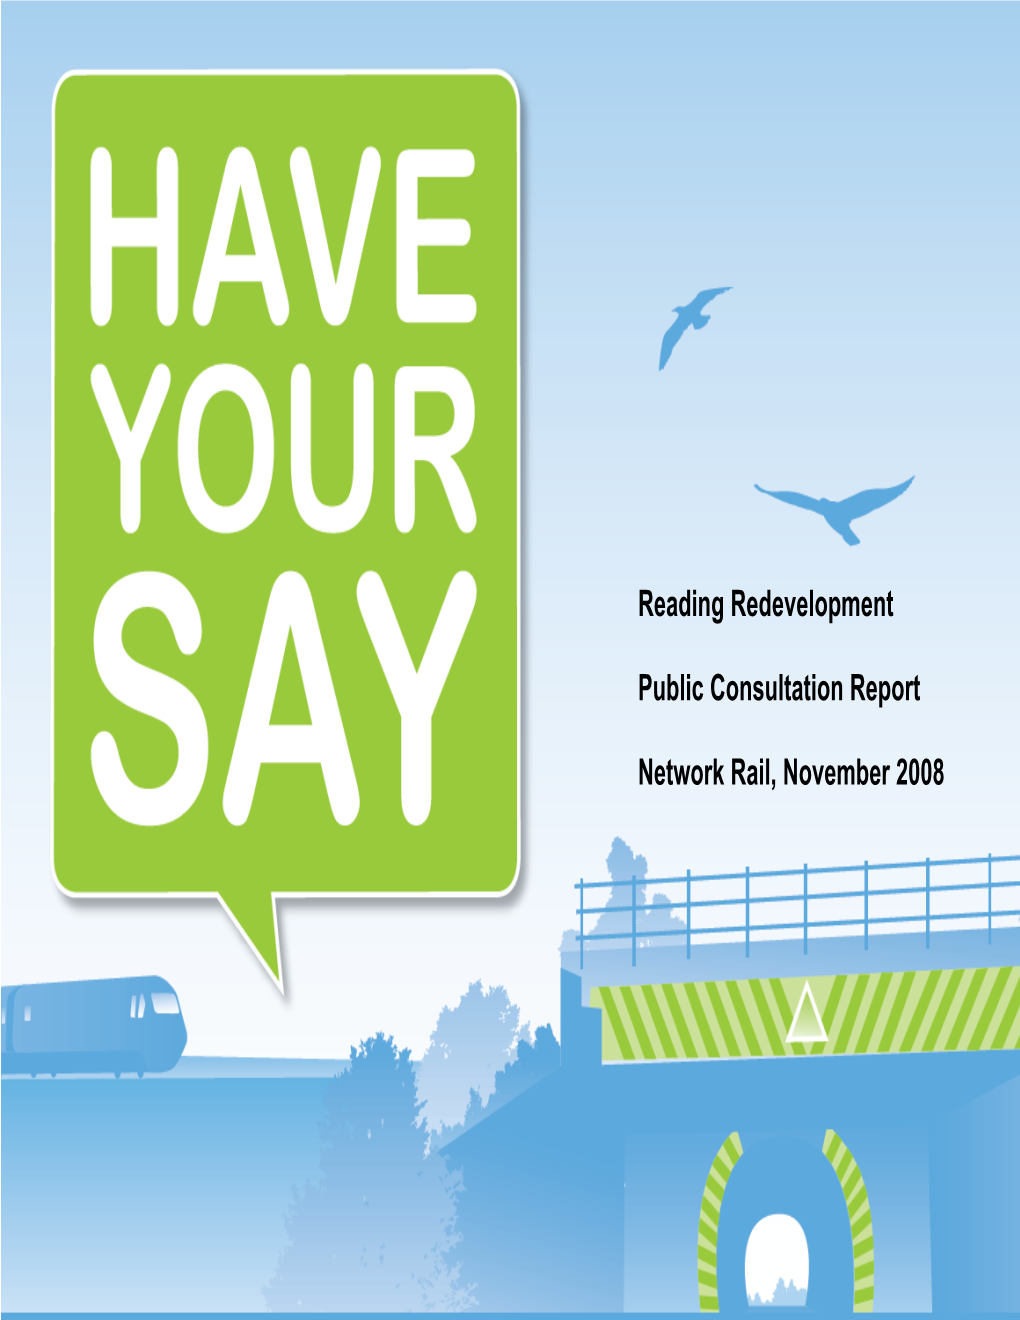 Reading Redevelopment Public Consultation Report Network Rail